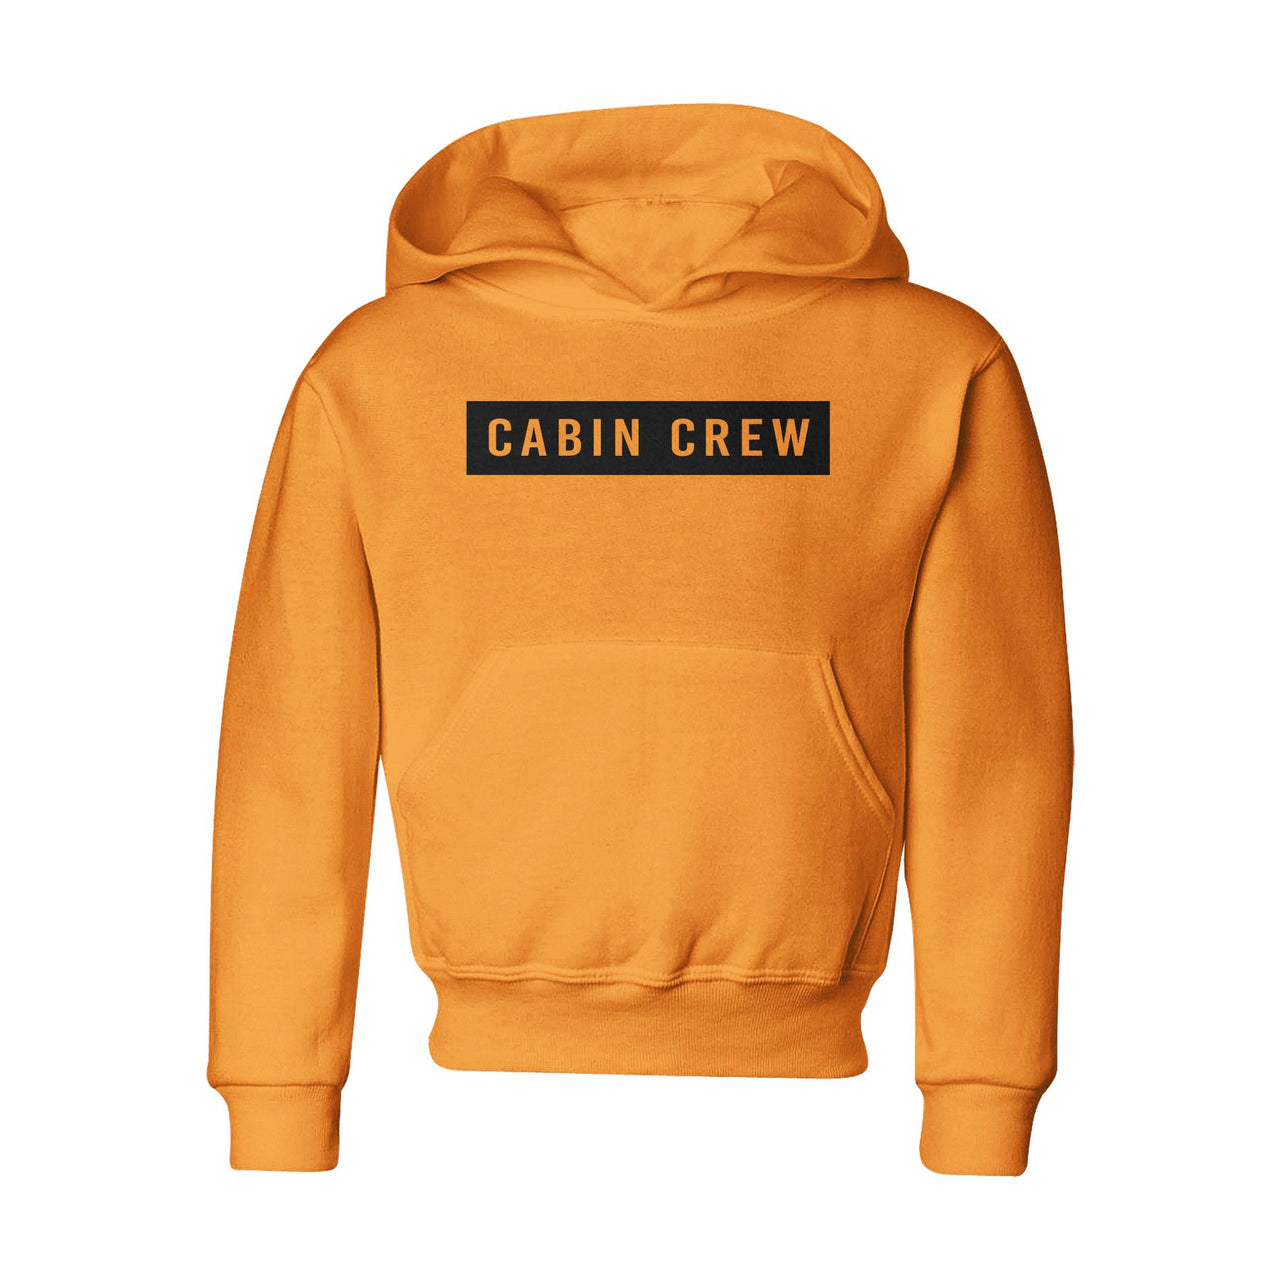 Cabin Crew Text Designed "CHILDREN" Hoodies